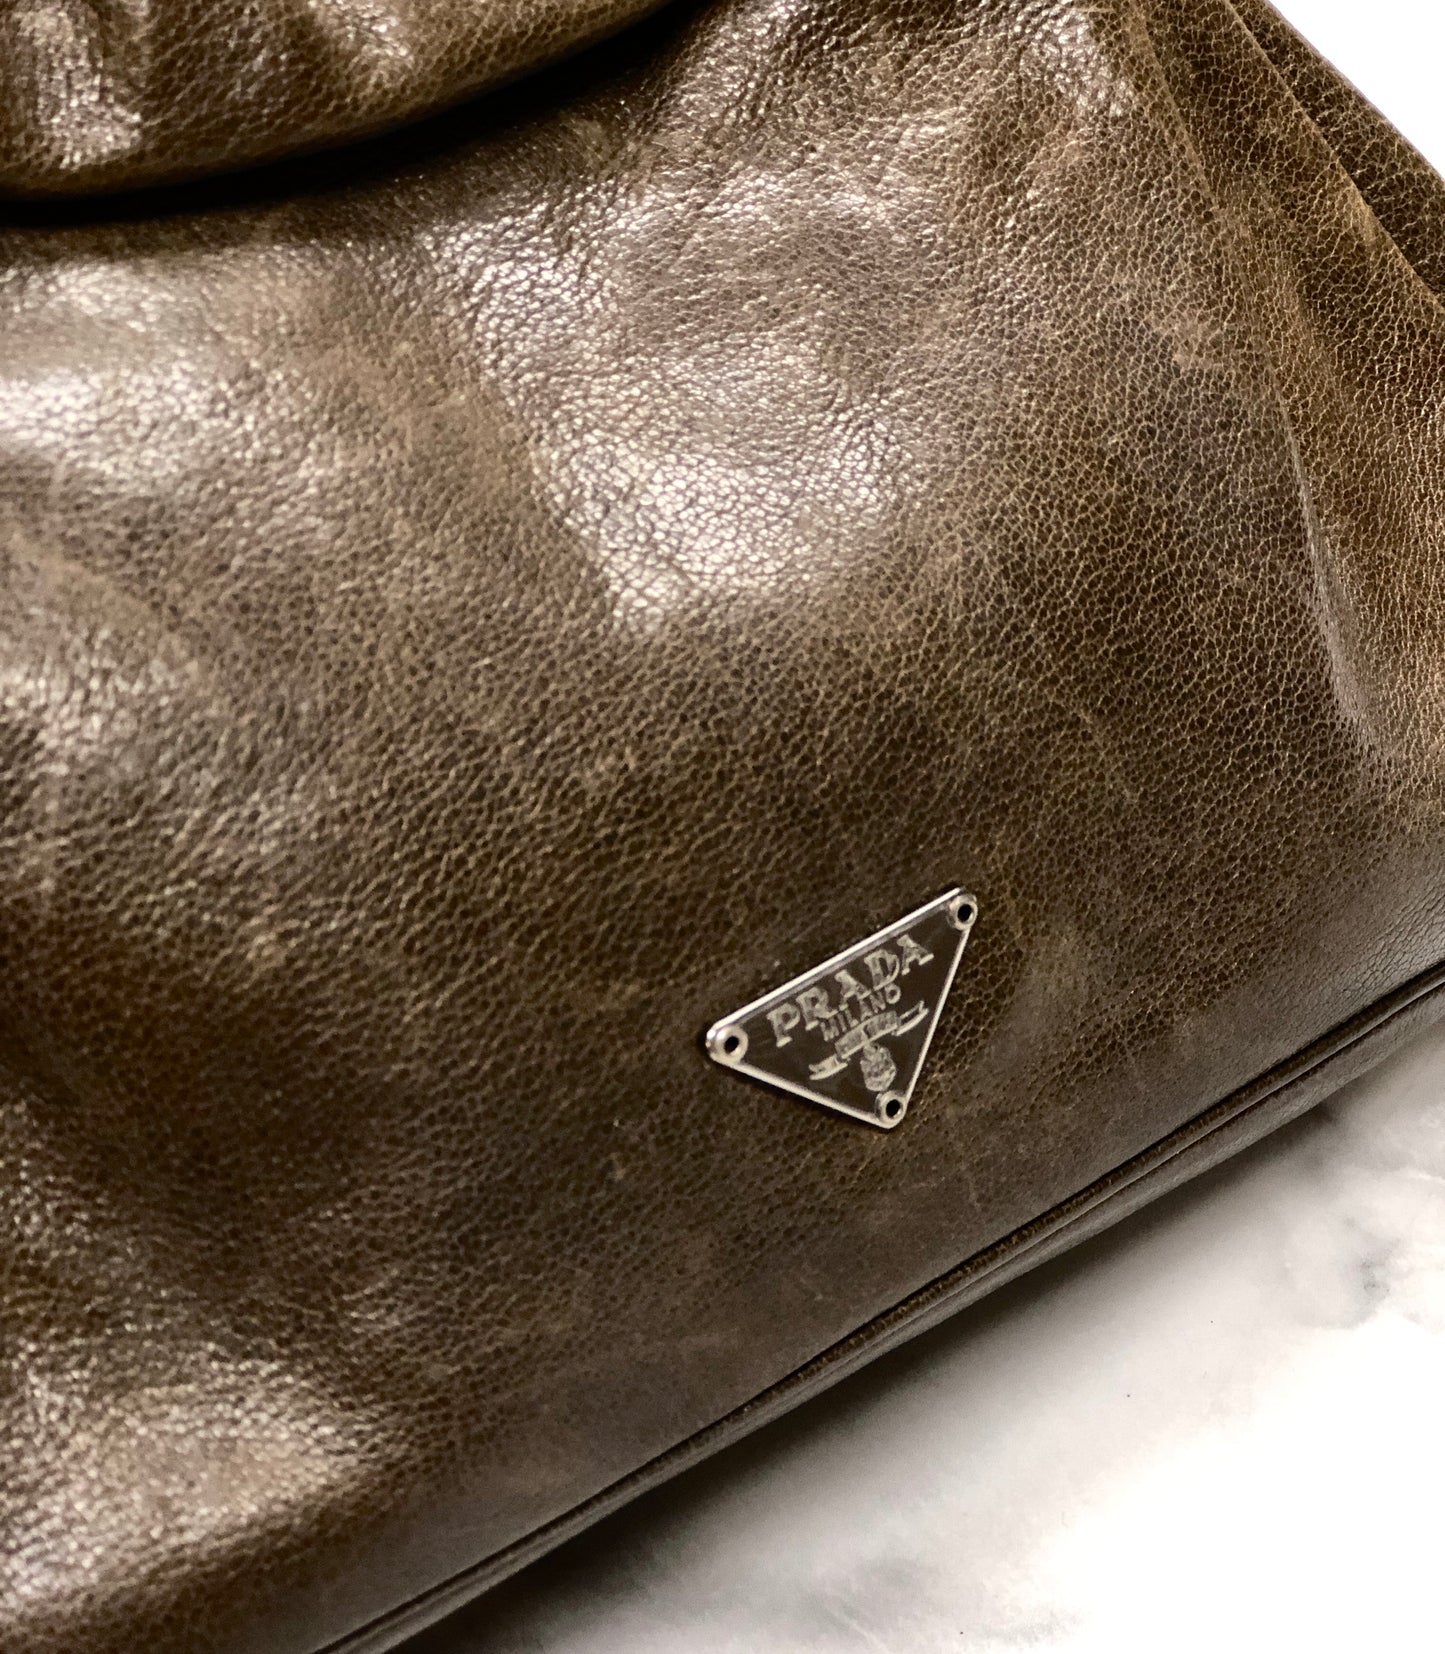 PRADA leather chain party bag handbag mini bag brown vintage old 37czyb